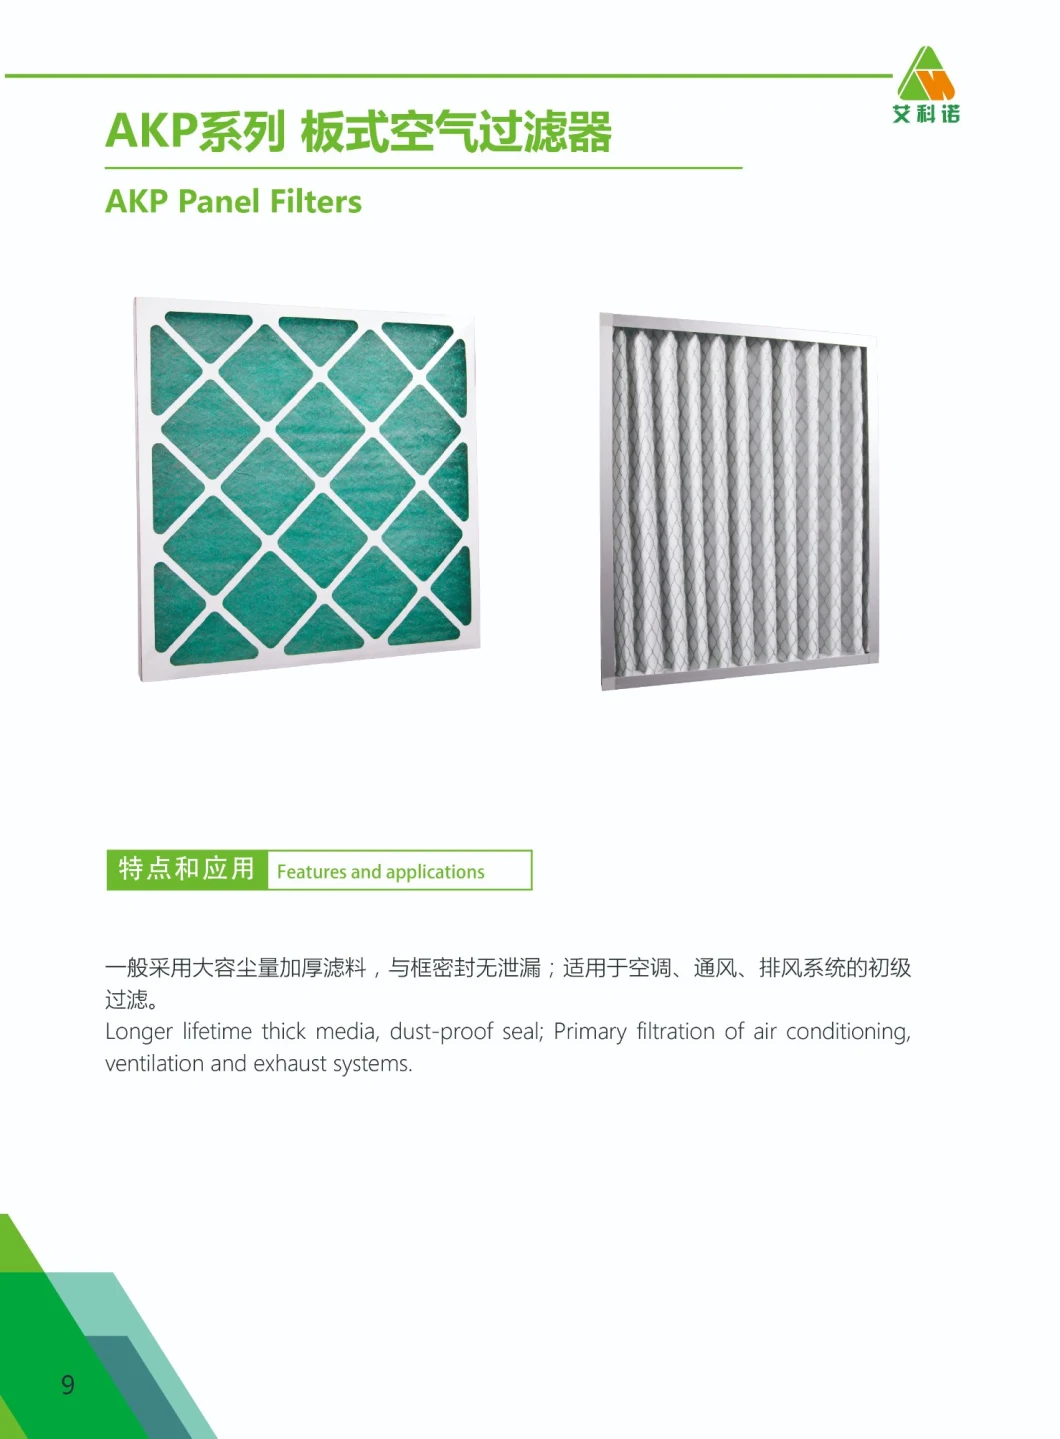 Medium Efficiency Panel Air Filter for Central Air Conditioning Ventilation System